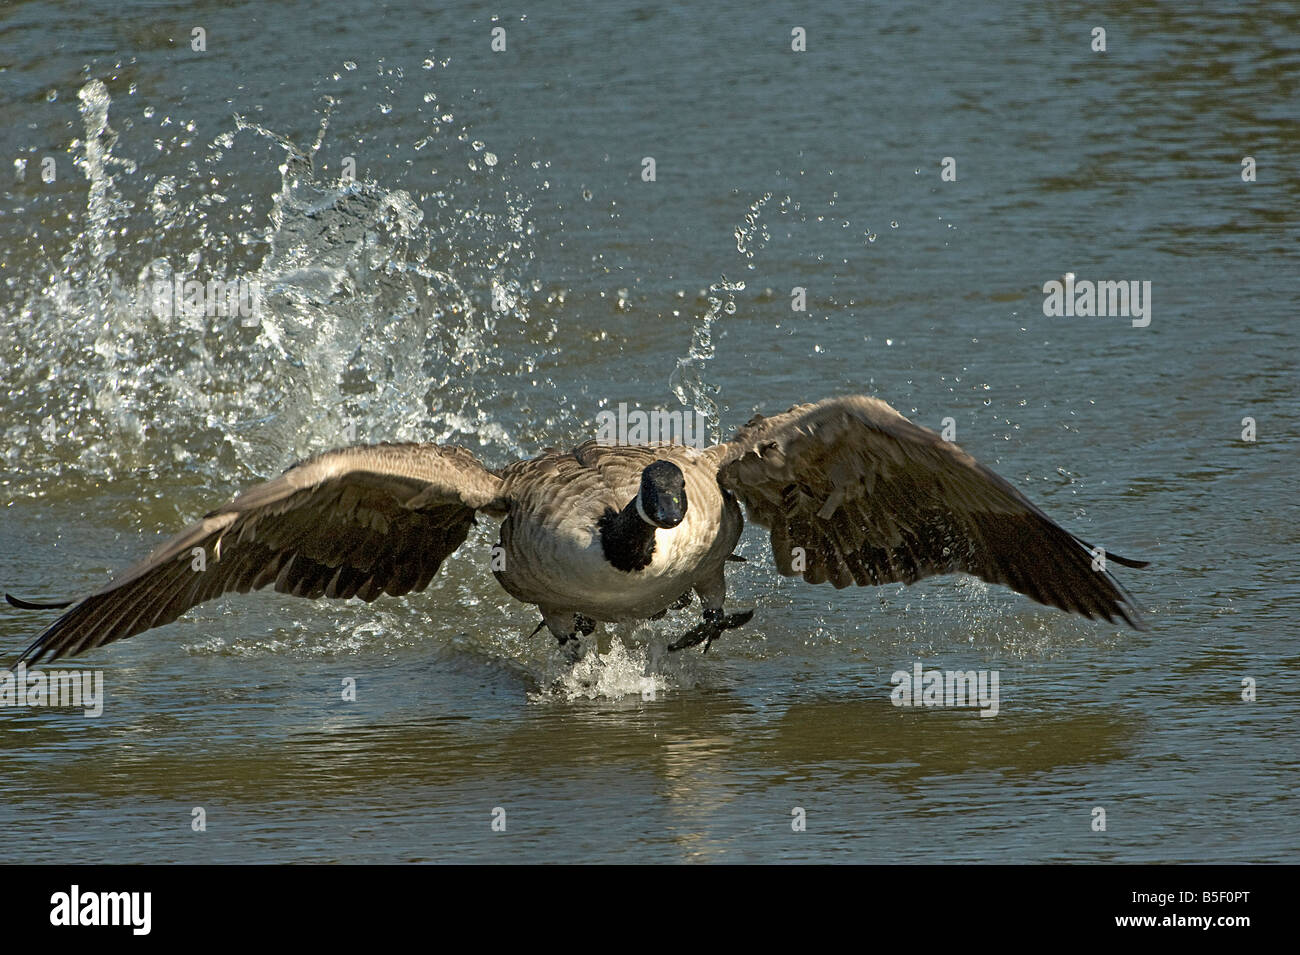 Canada goose Branta canadensis taking off towards the camera Stock Photo